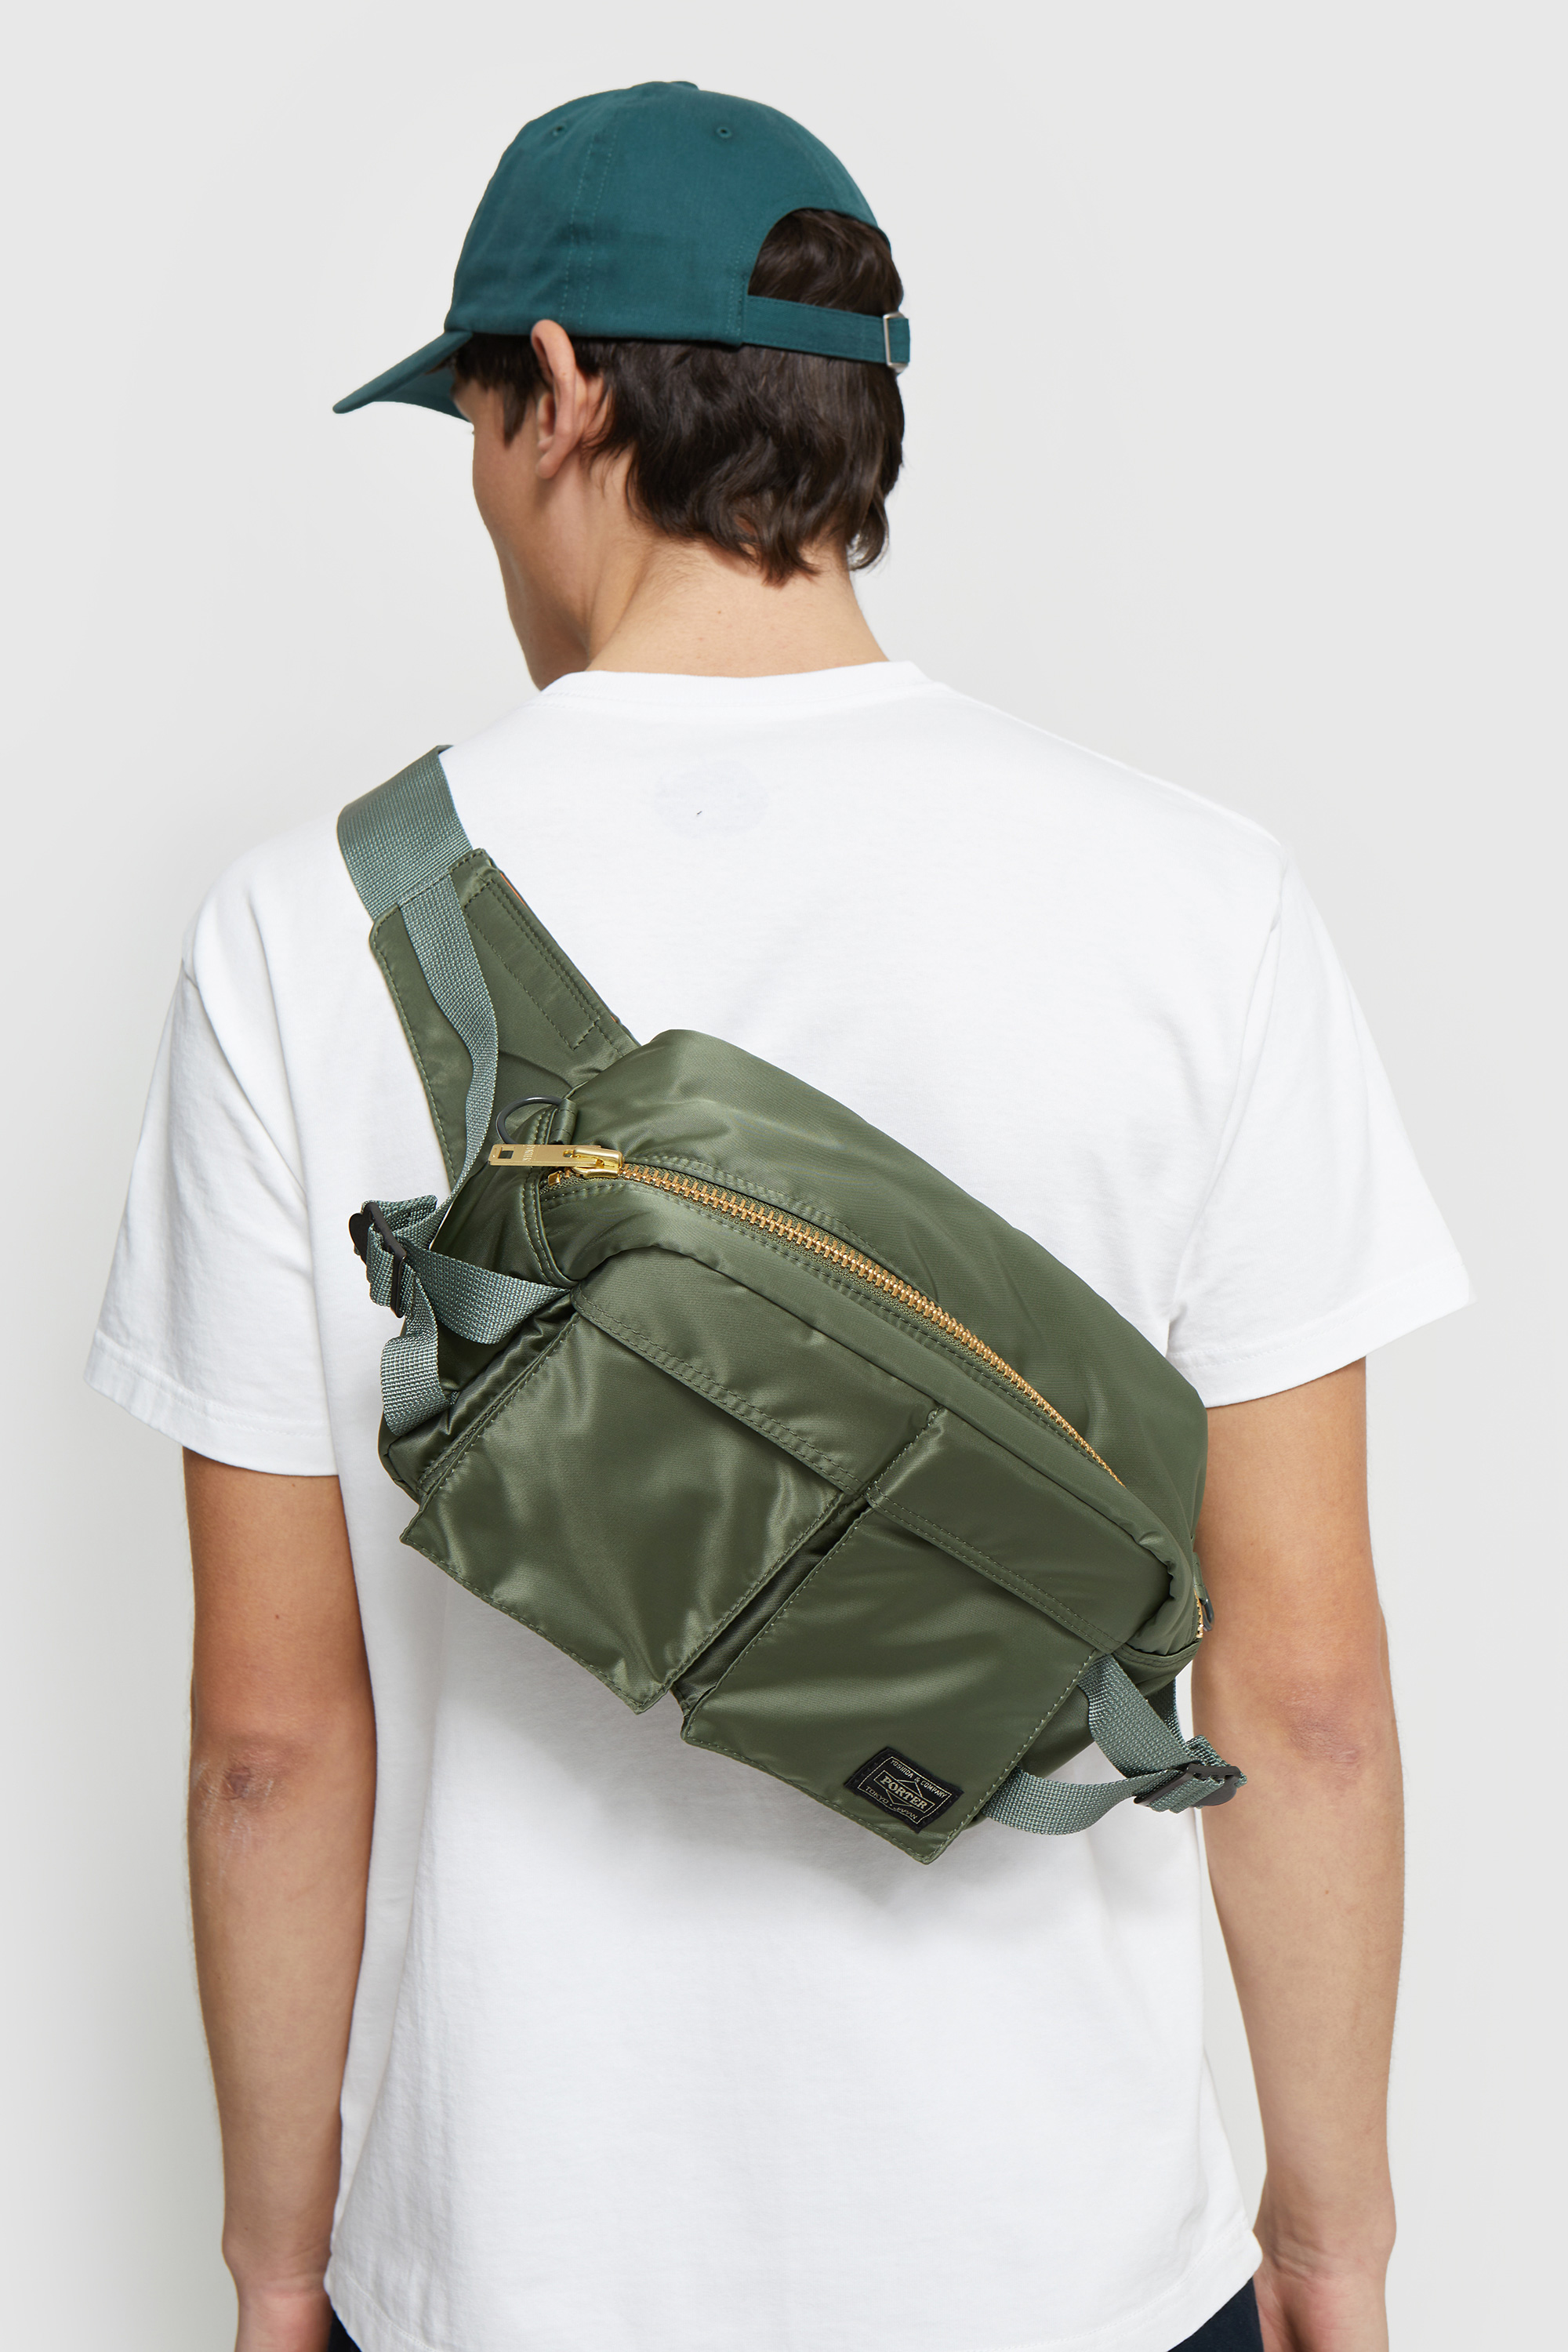 Porter-Yoshida & Co. x Will Sweeney zip-up shoulder bag - Black